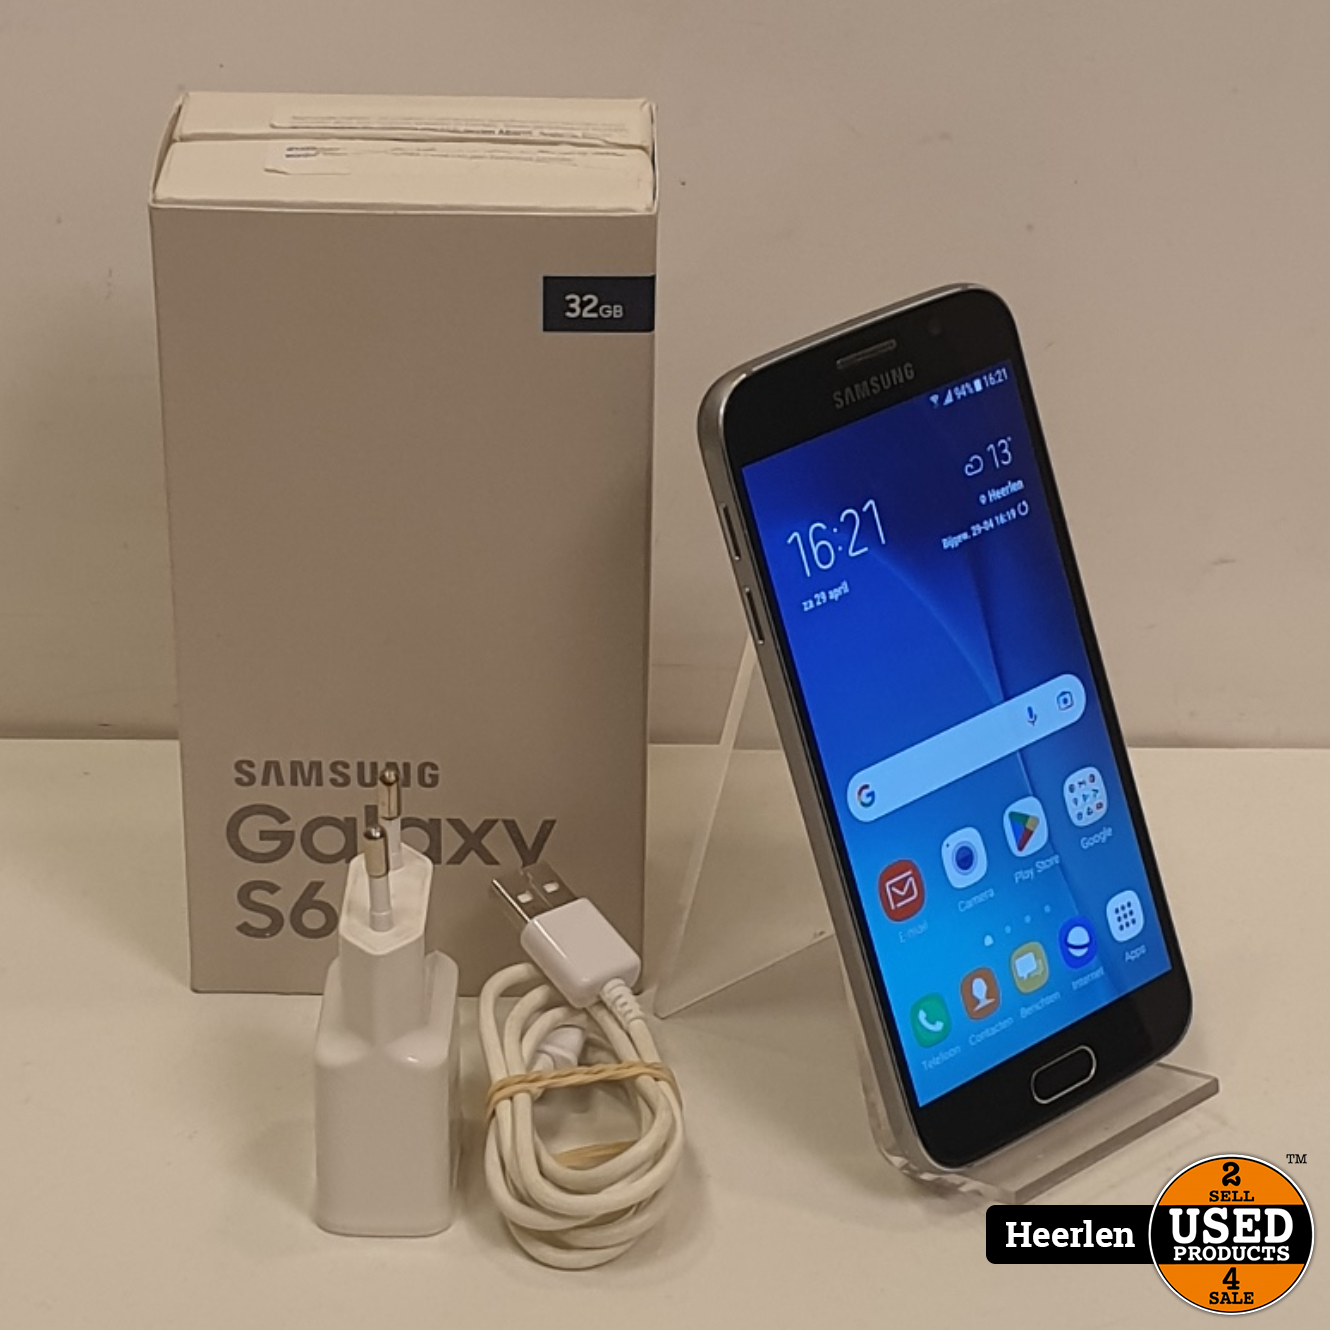 draadloos sociaal Tante Samsung Galaxy S6 32GB | Zwart | A-Grade | Met Garantie - Used Products  Heerlen